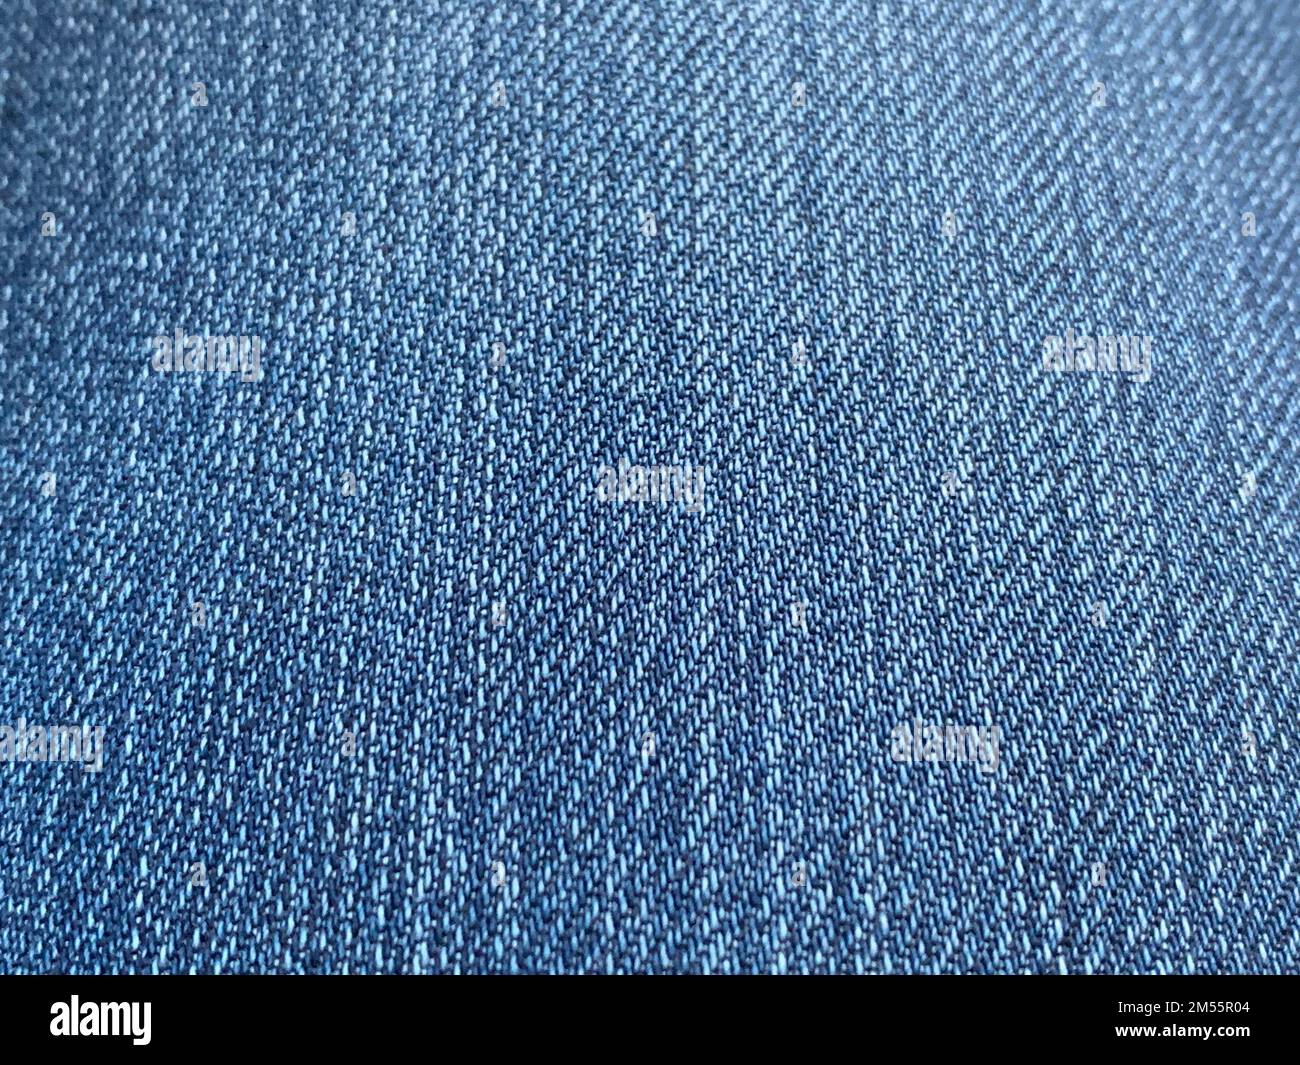 Blue Jeans Tela de algodón de tela de fondo foto de primer plano Foto de stock